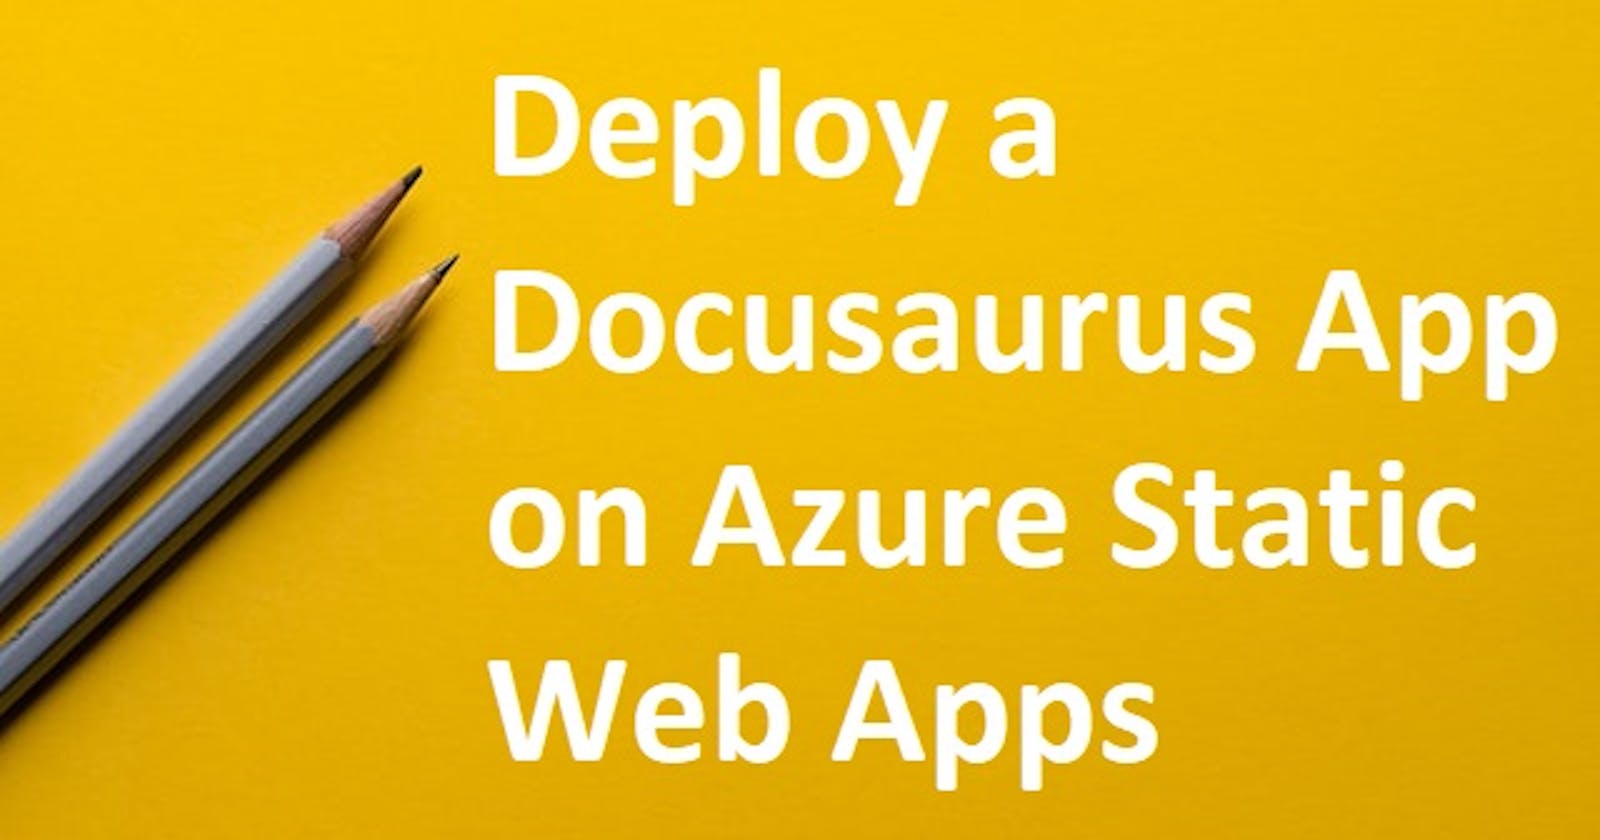 Deploy a Docusaurus App on Azure Static Web Apps